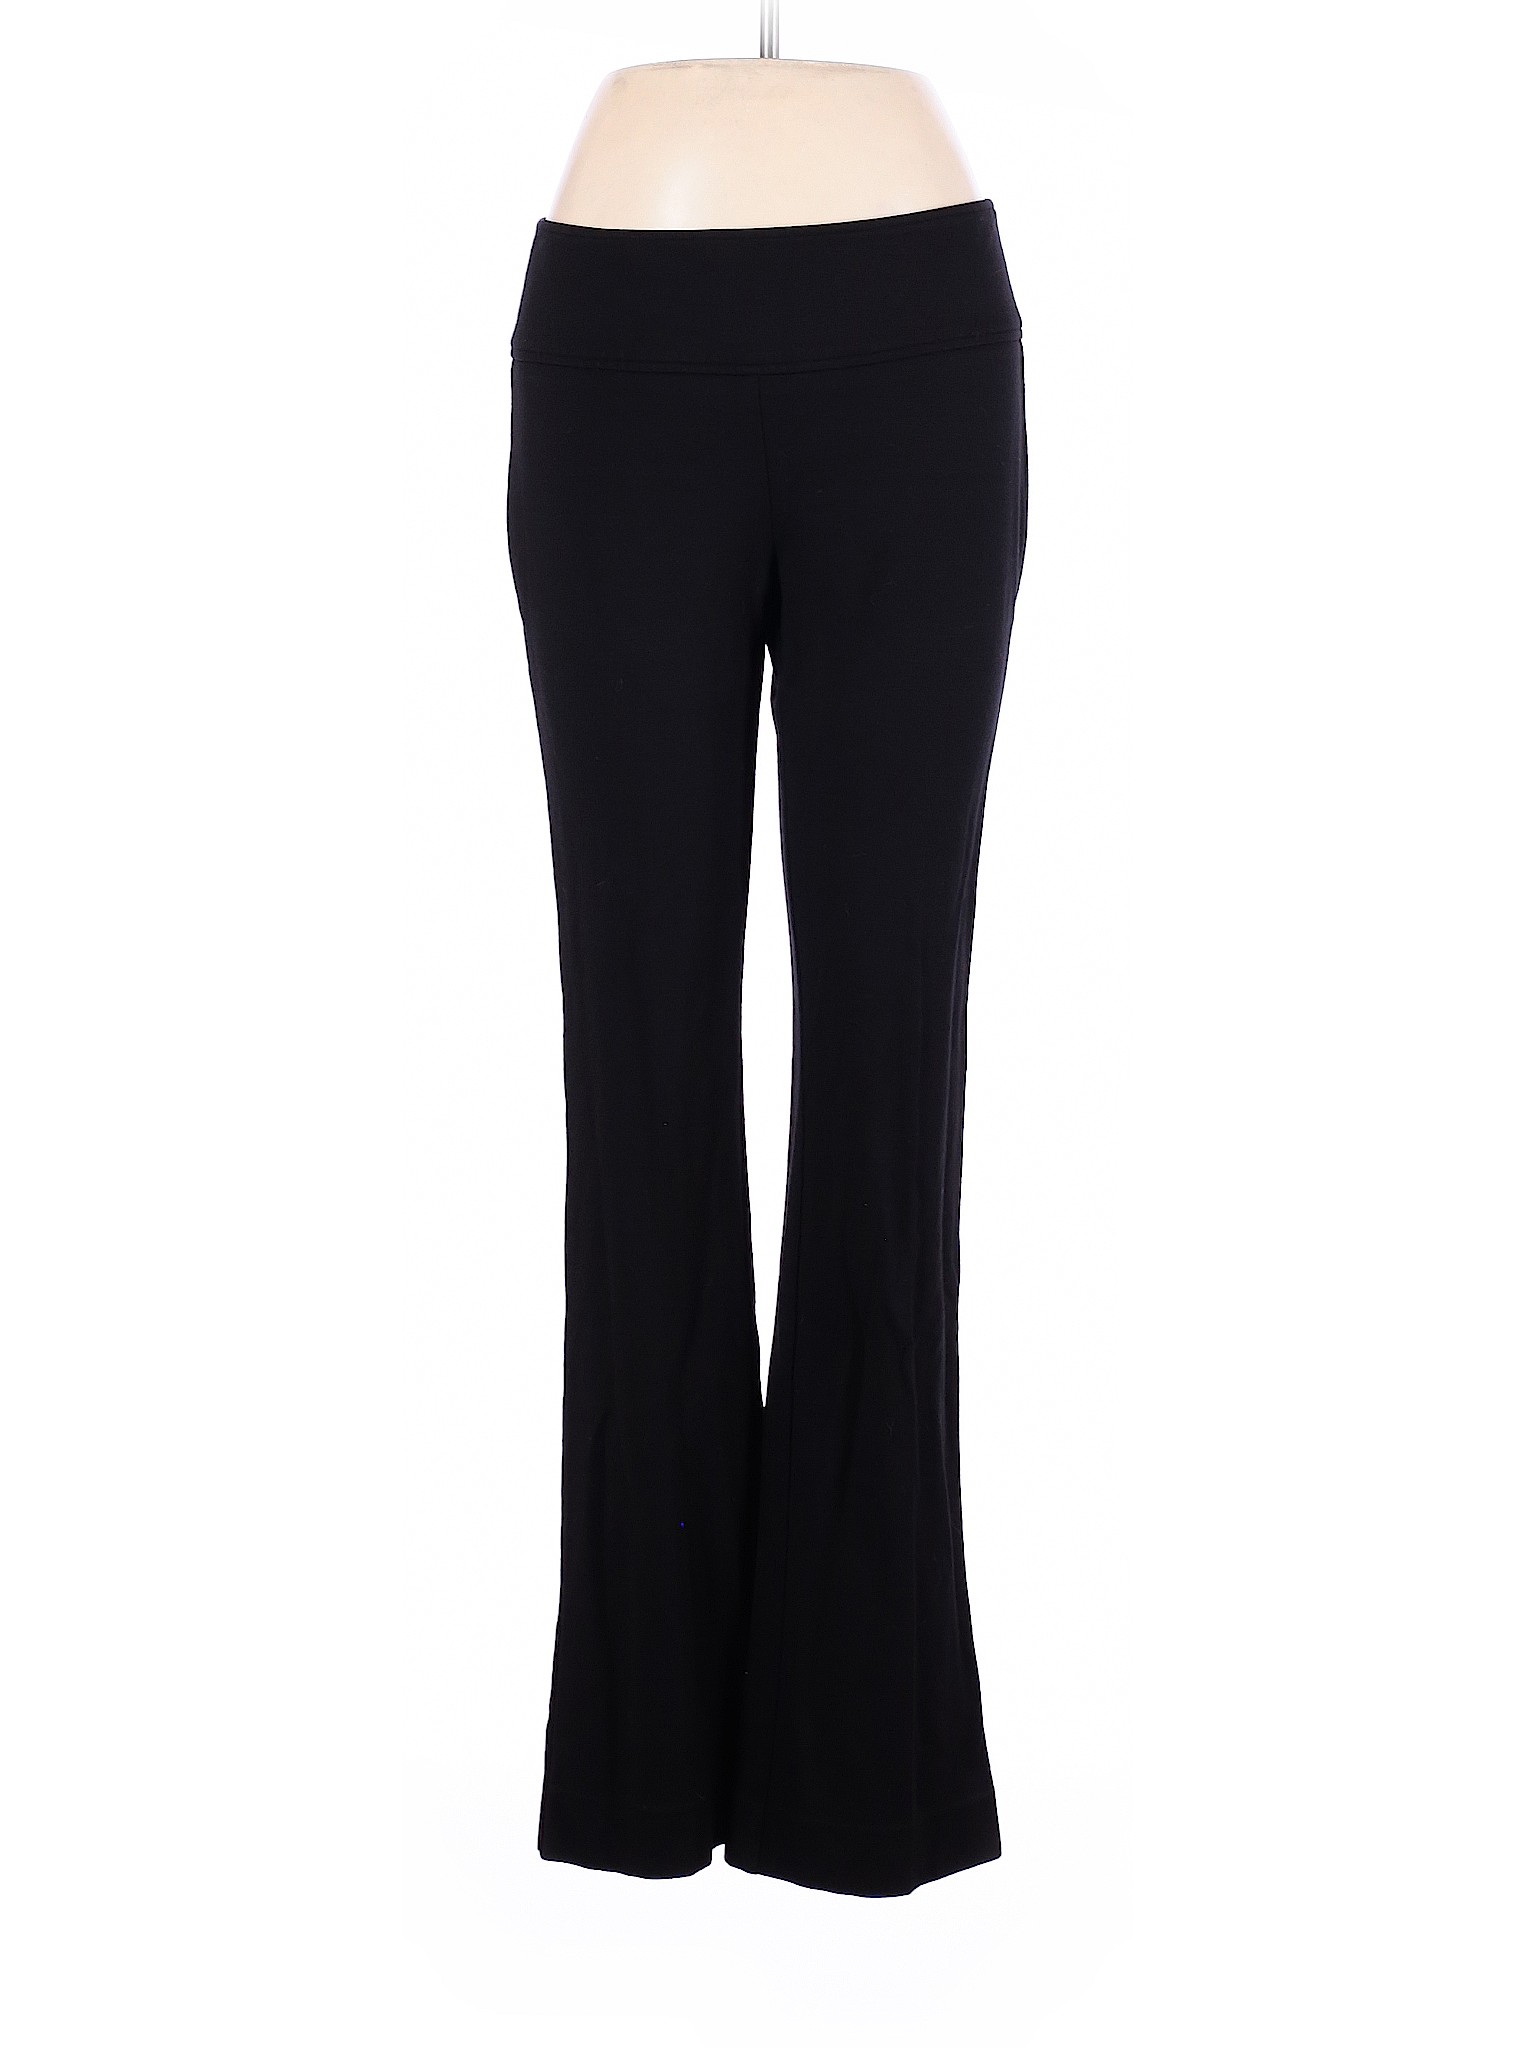 CAbi Women Black Dress Pants 6 | eBay